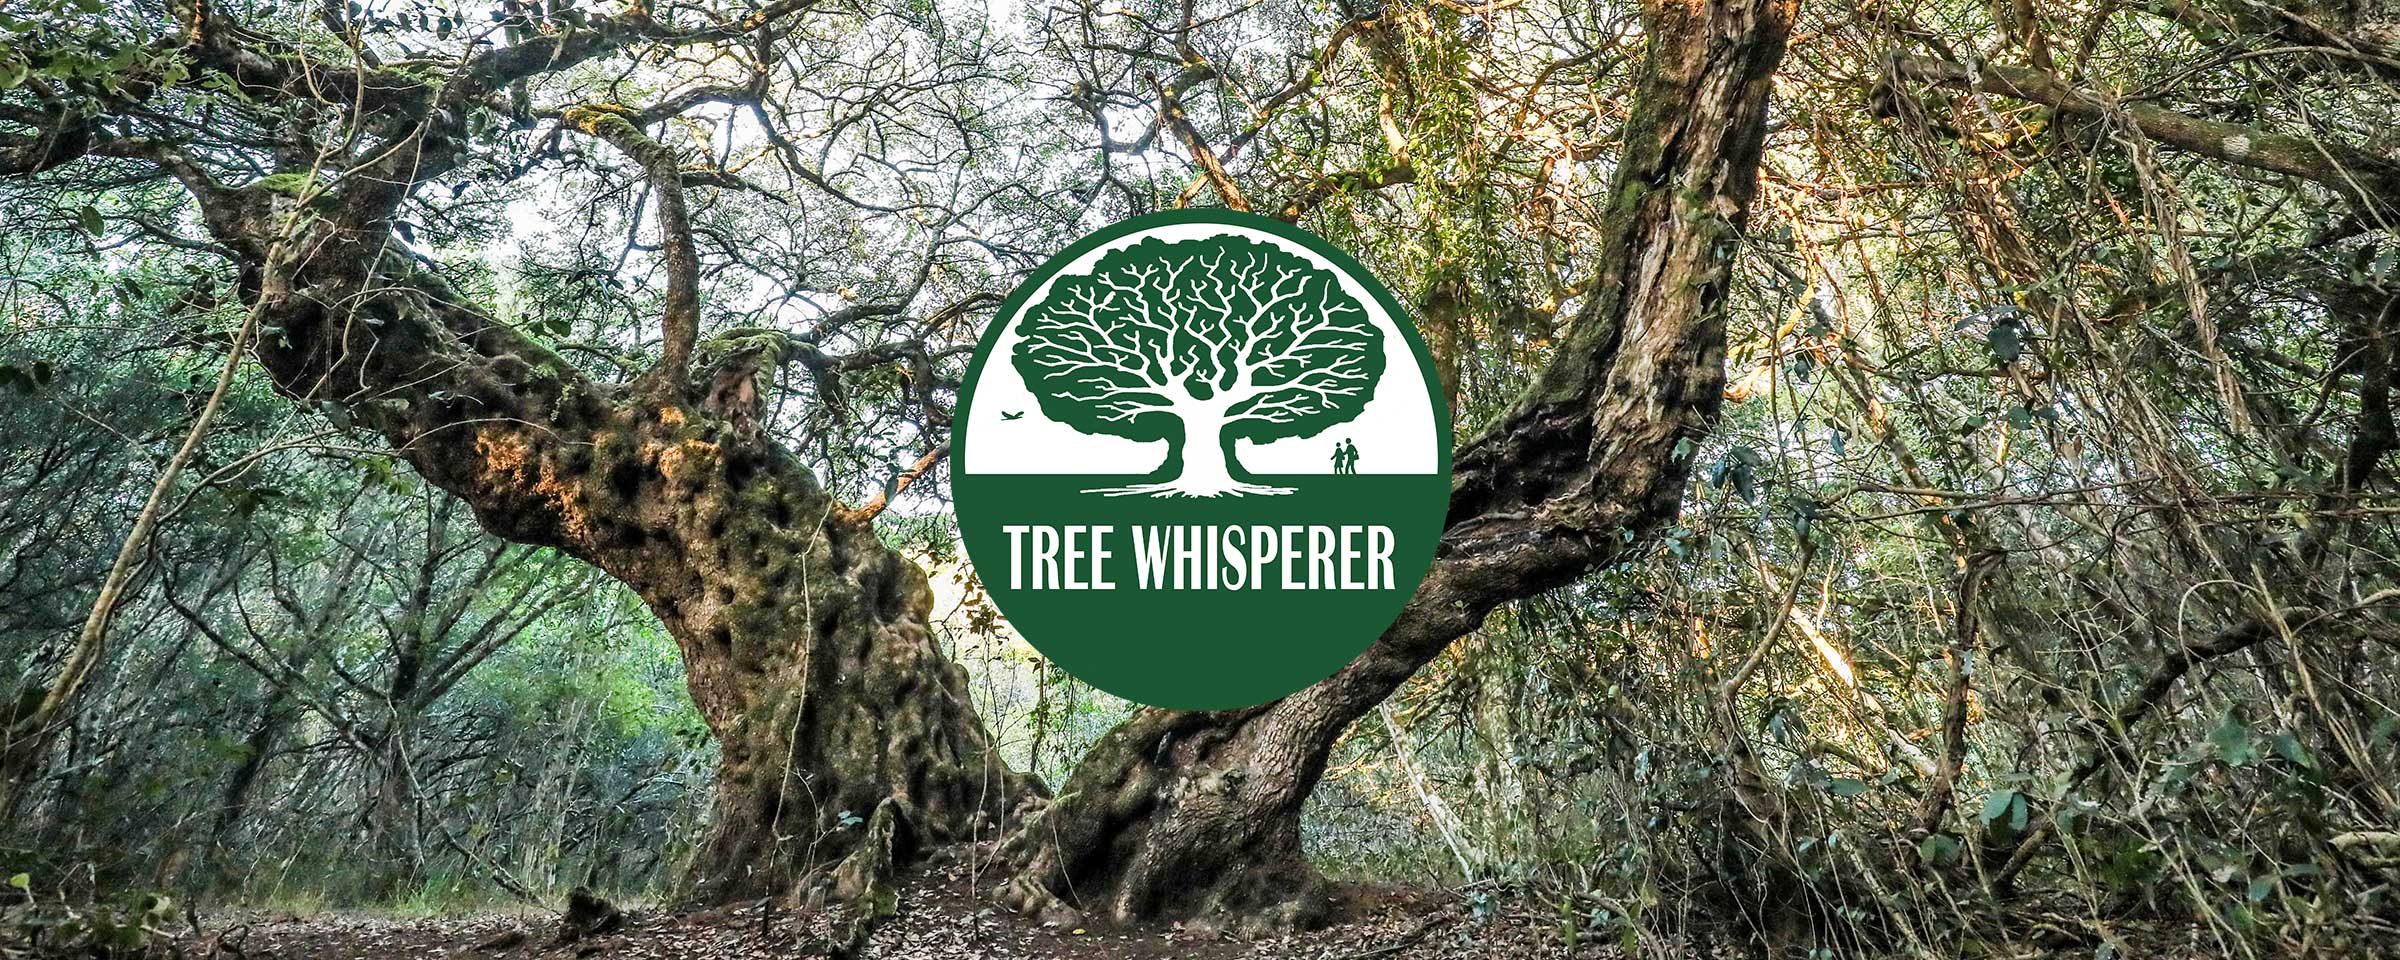 Tree Whisperer Forest Management company